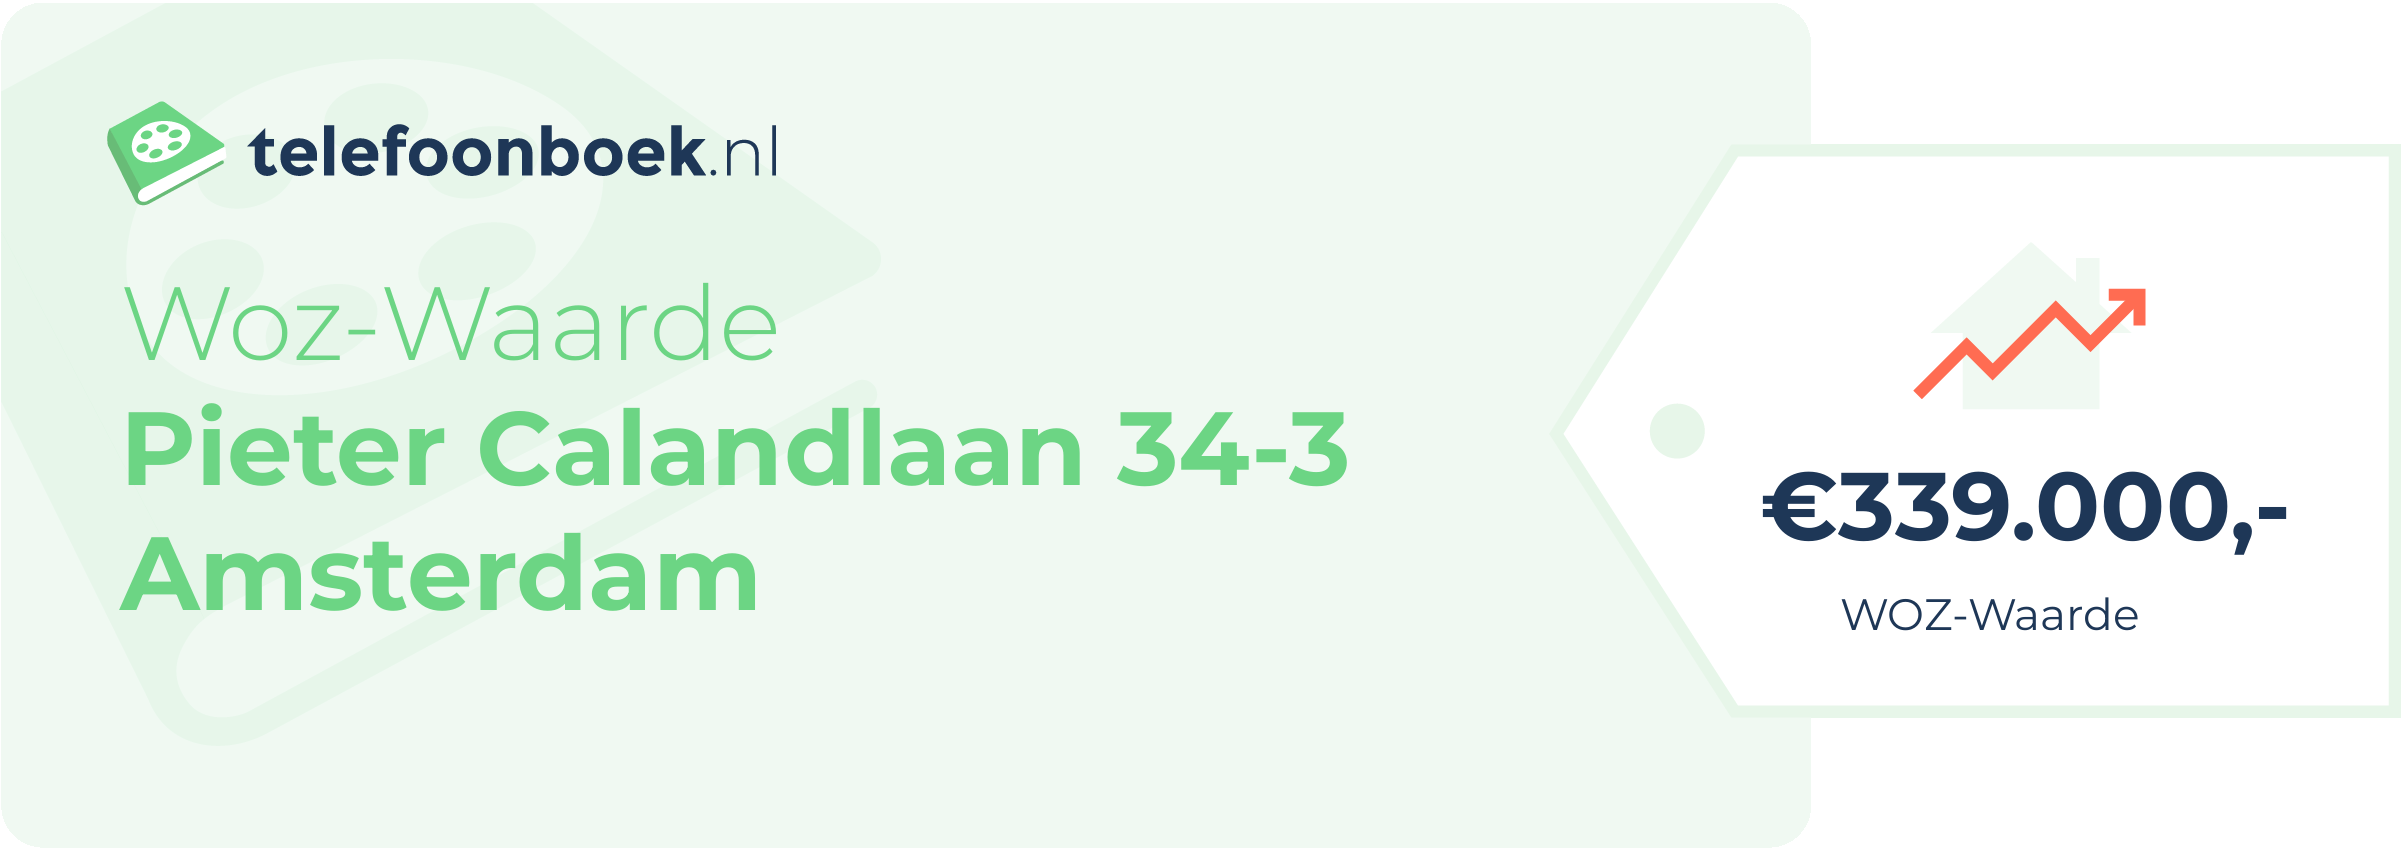 WOZ-waarde Pieter Calandlaan 34-3 Amsterdam